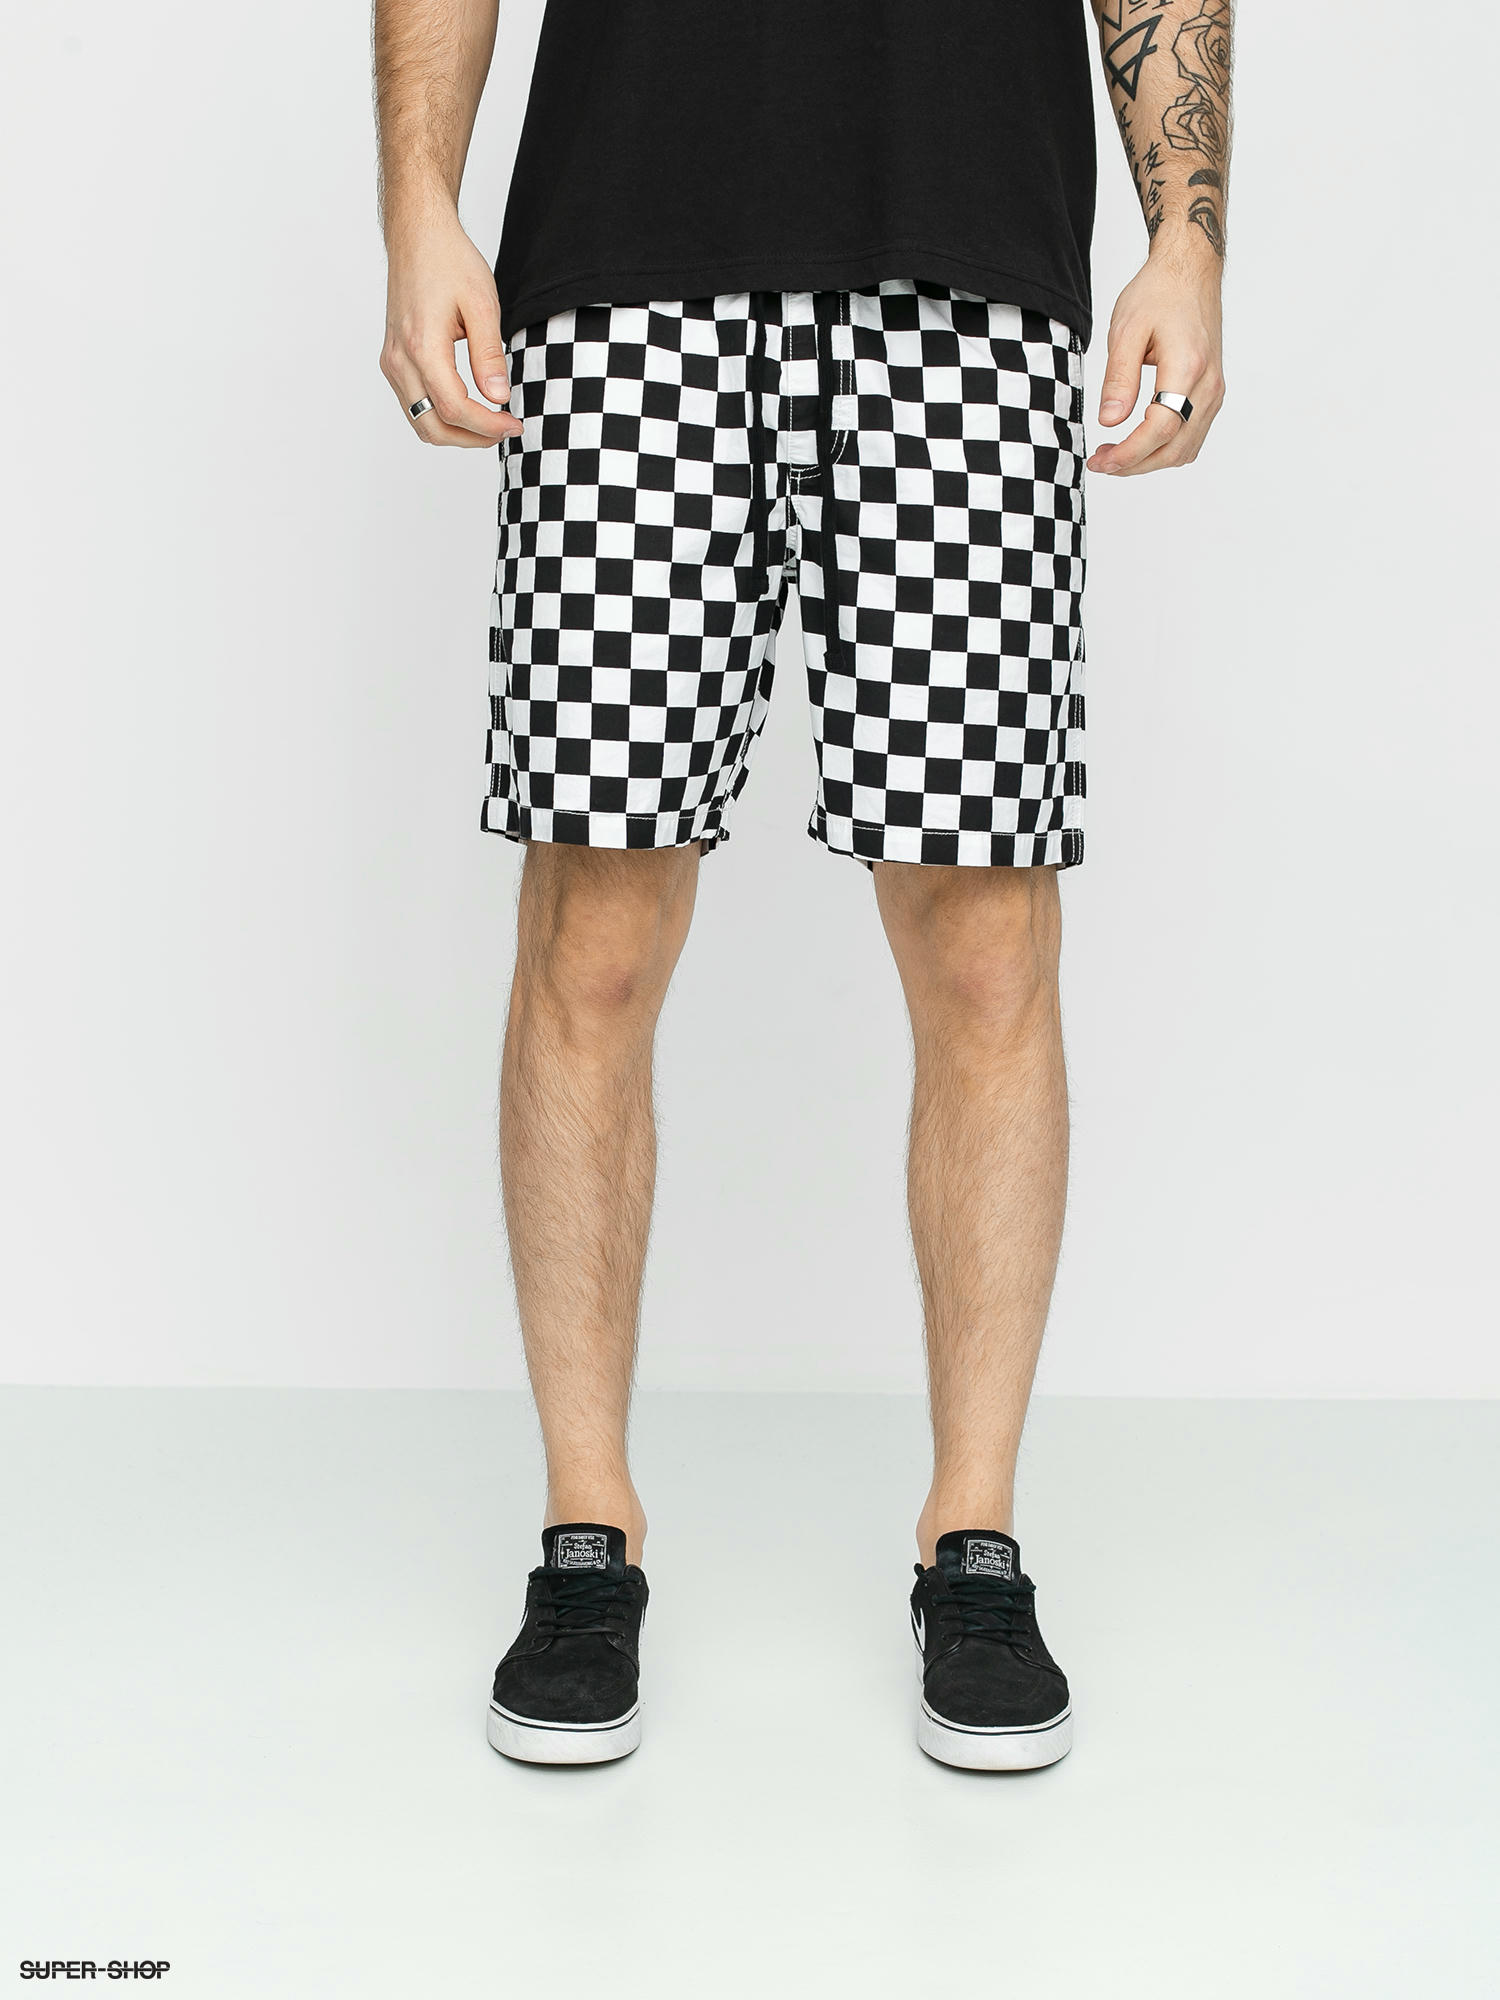 checkerboard pants vans